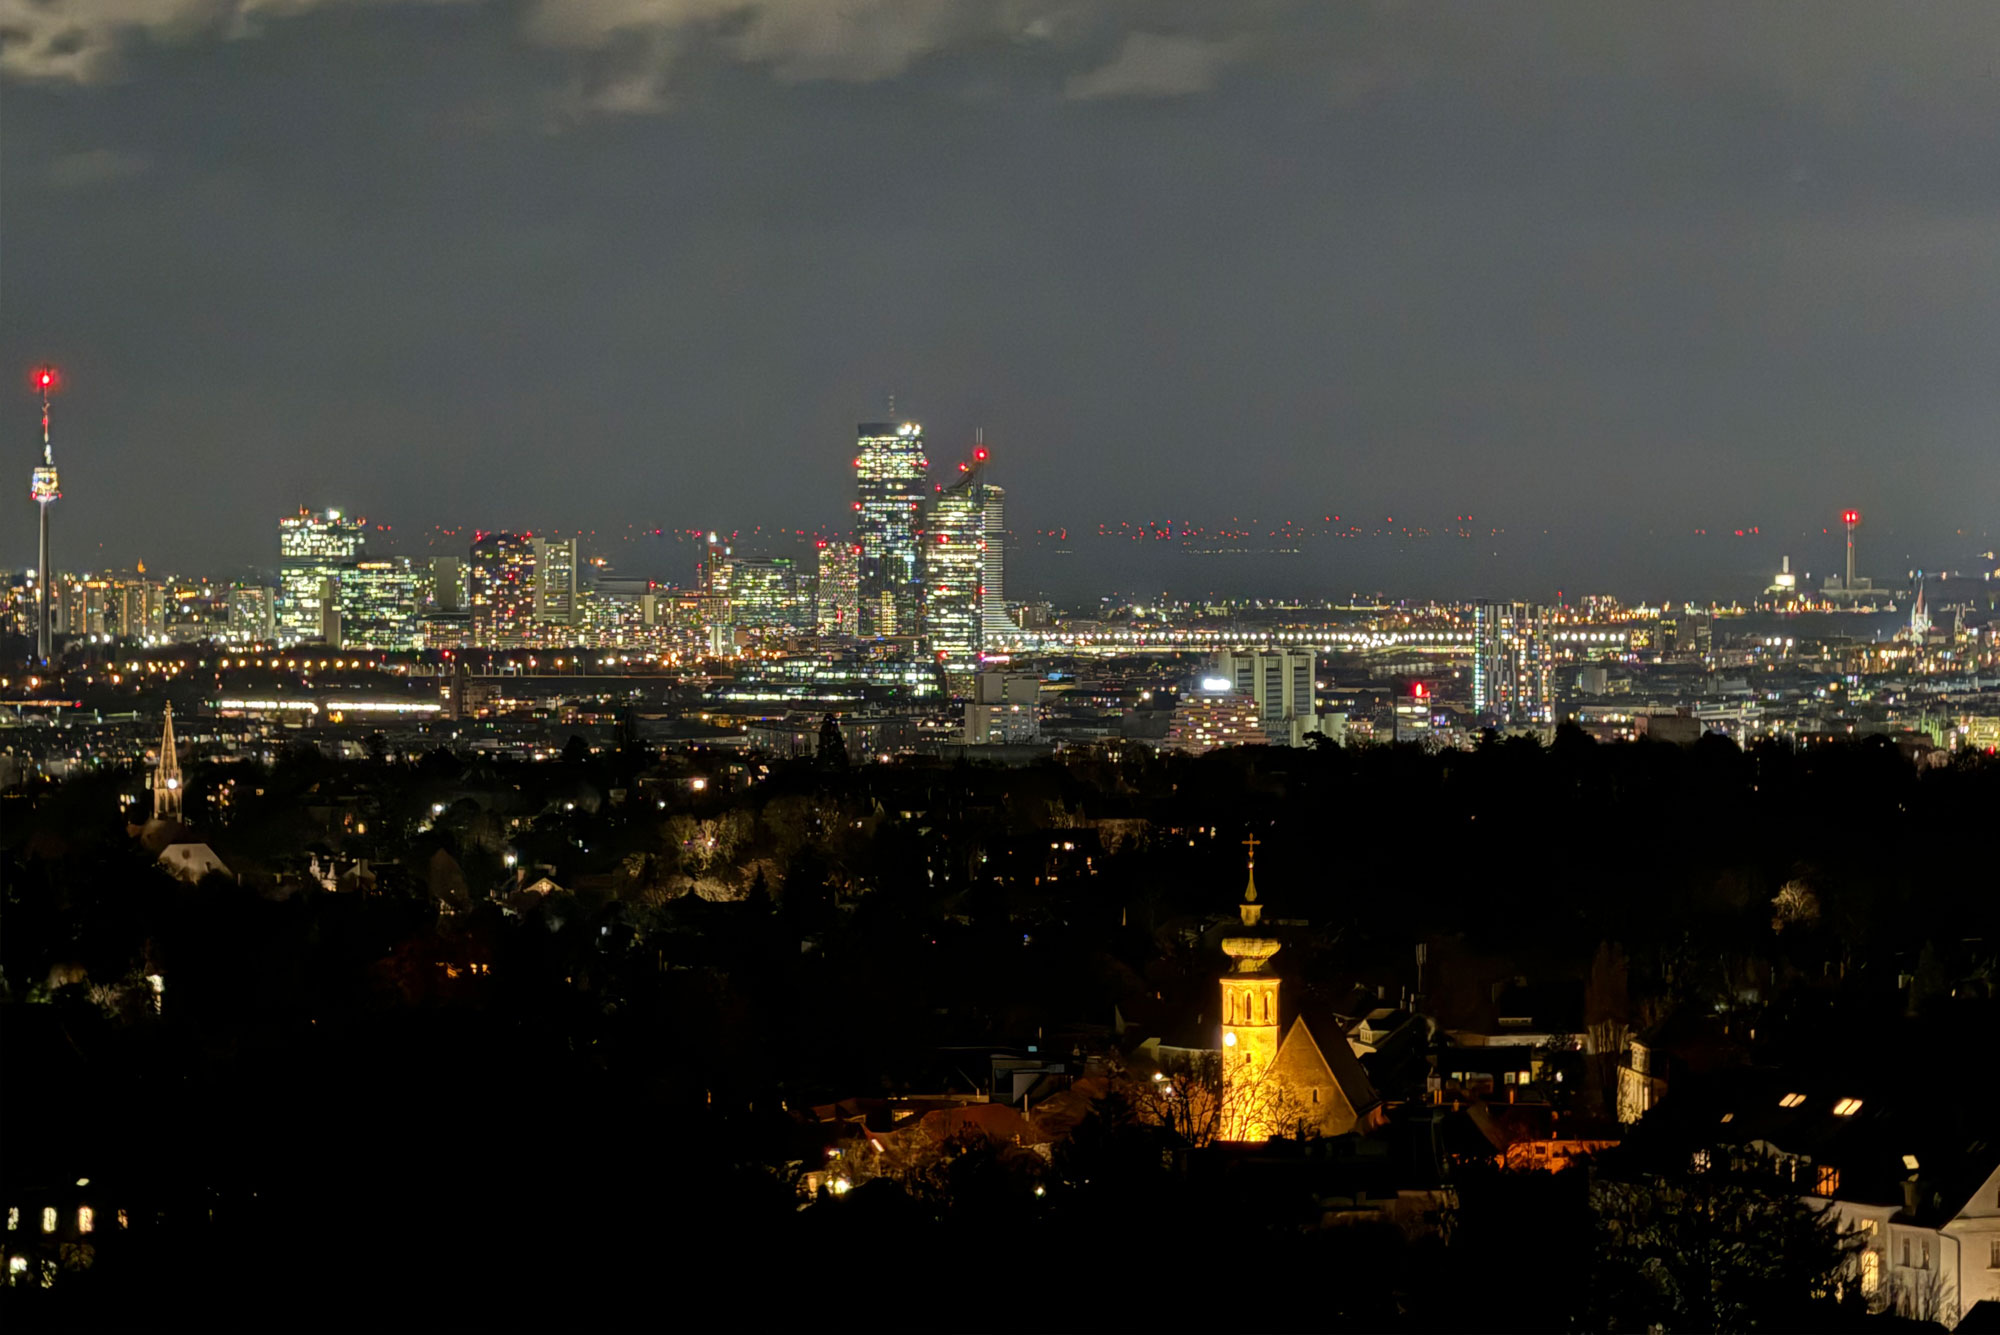 nightview over Vienna from Eventlocation am Reisenberg